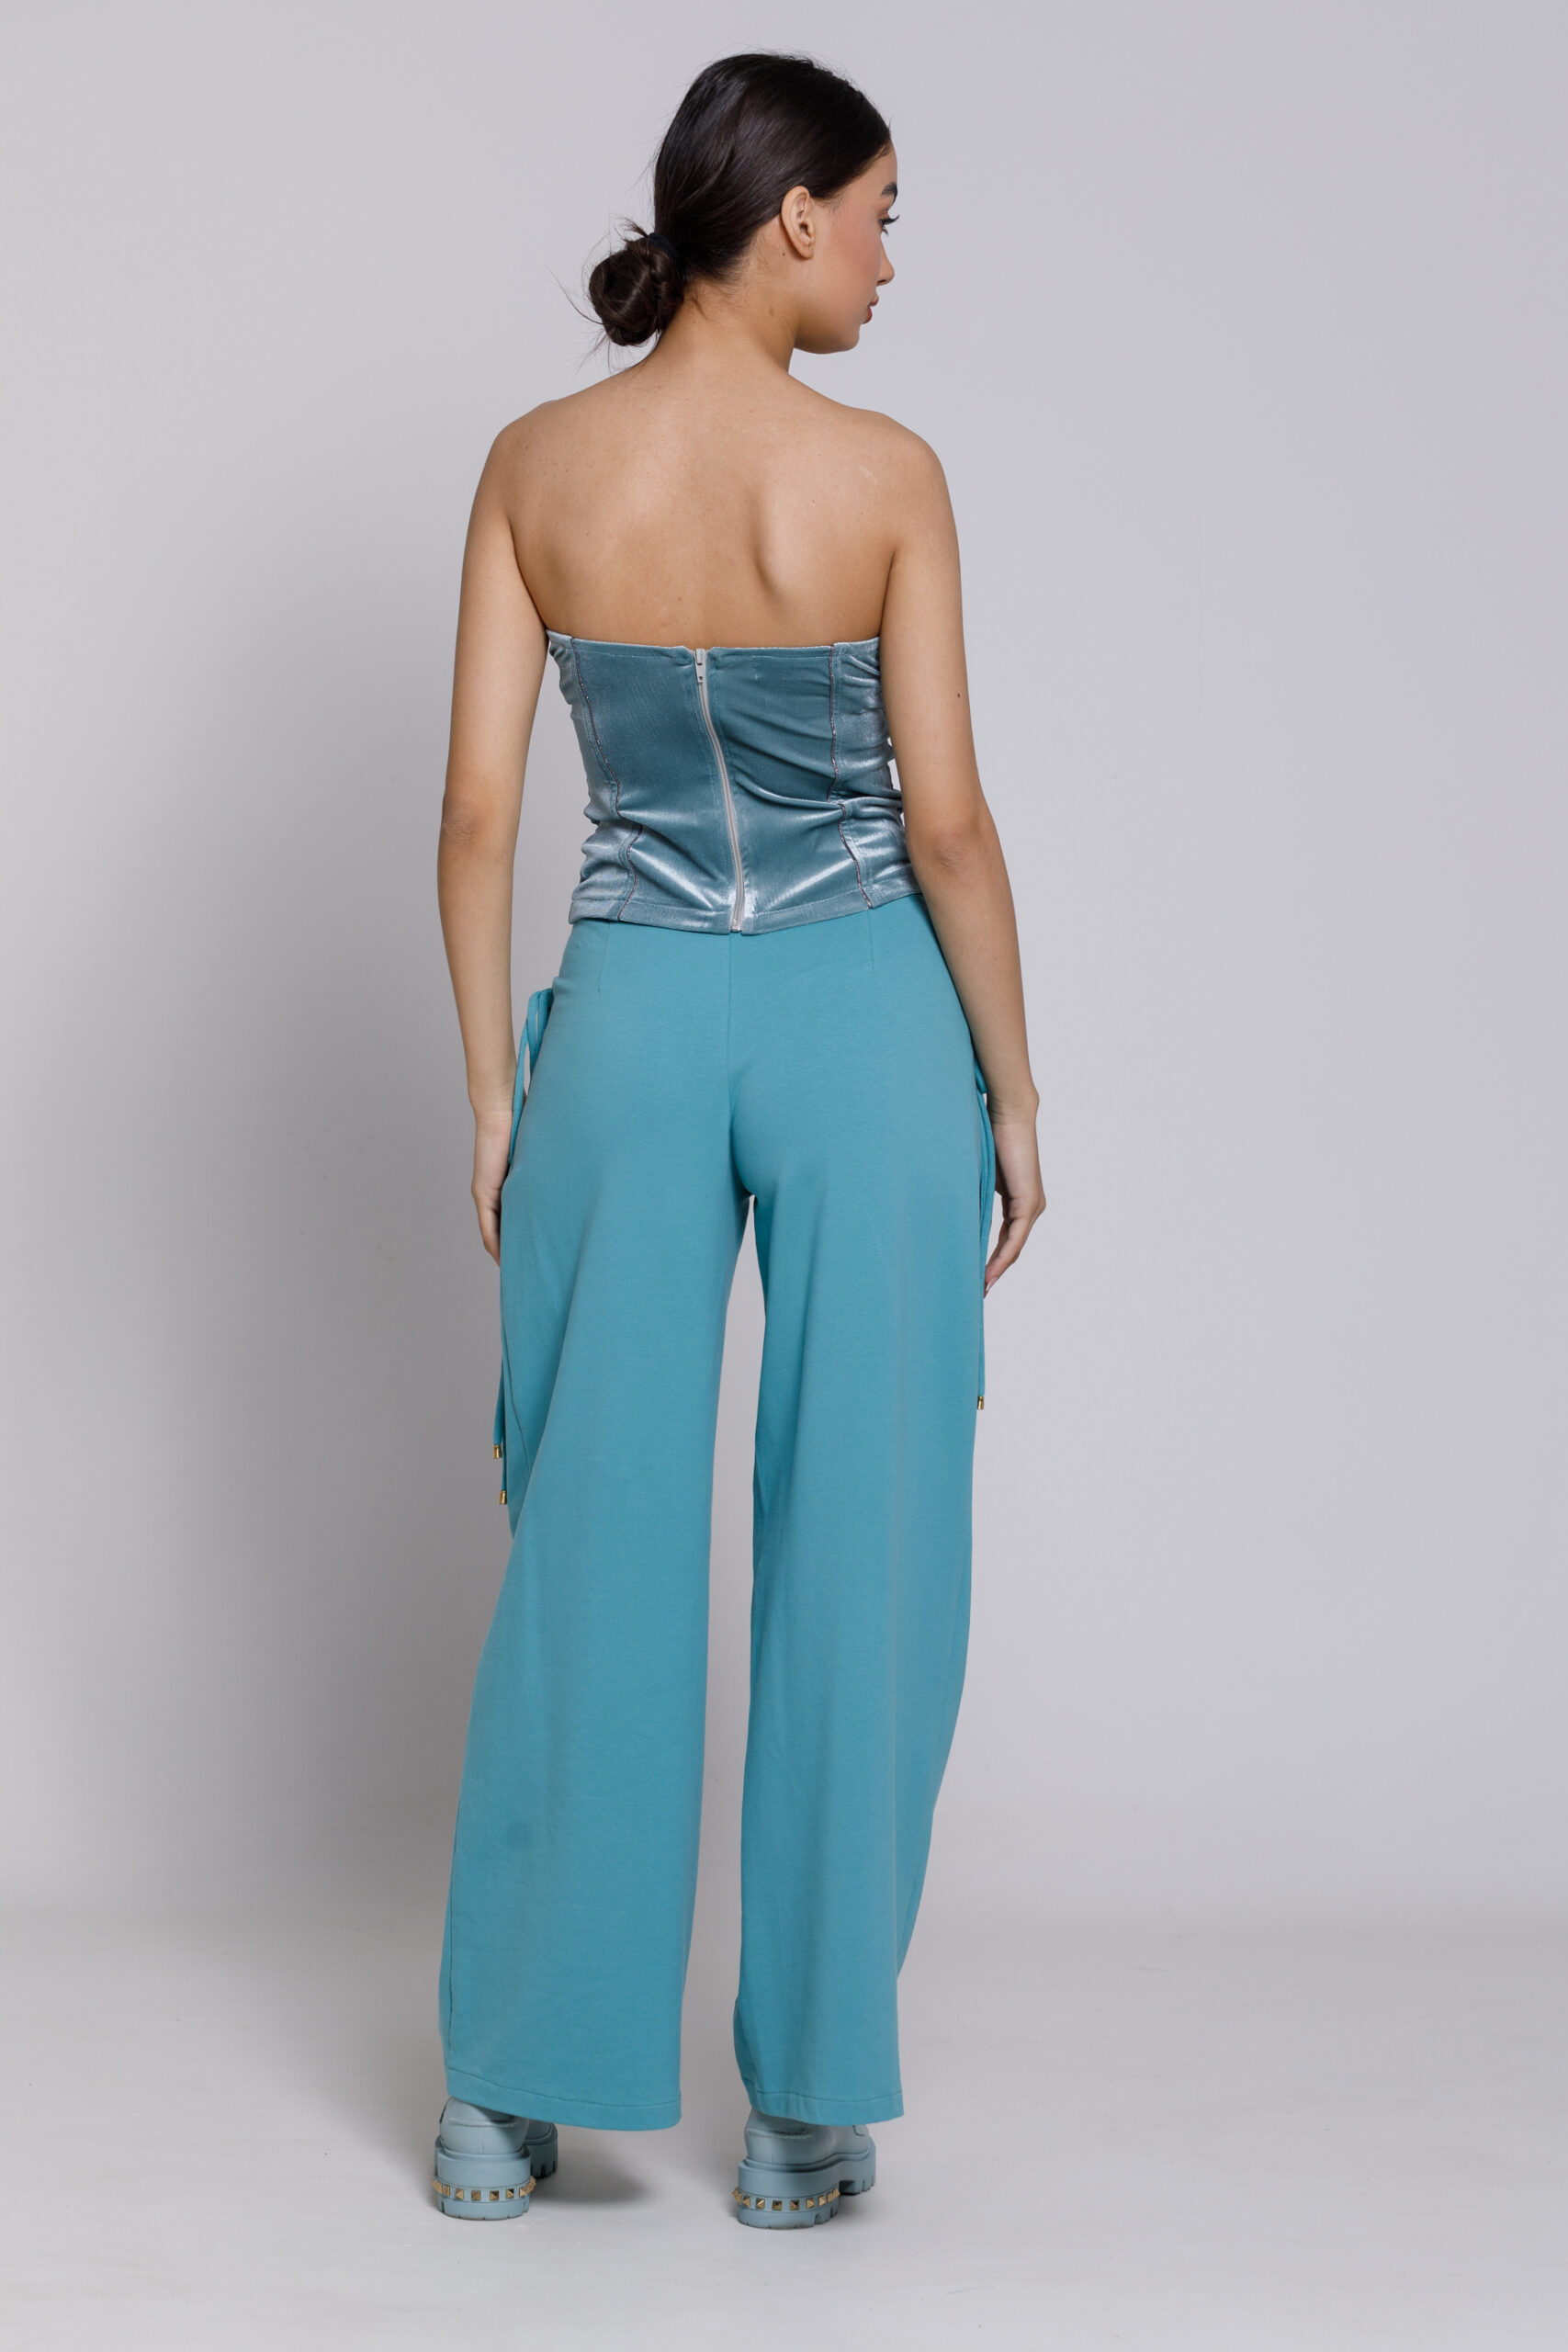 Pantalon BONNIE  turcoaz. Materiale naturale, design unicat, cu broderie si aplicatii handmade